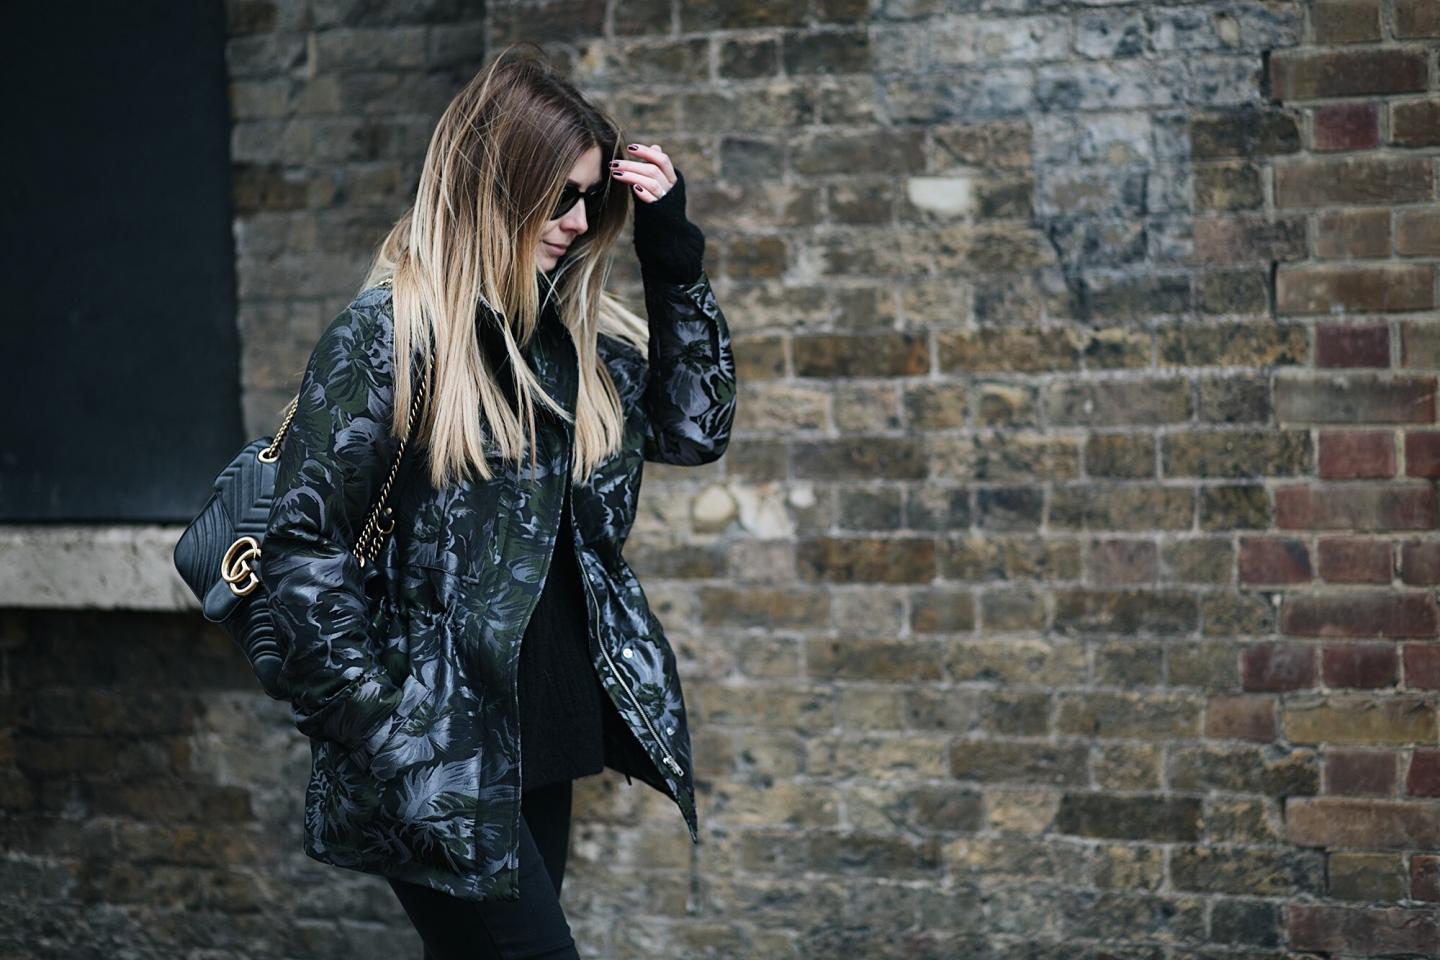 Emma Hill - EJSTYLE wears khaki & silver floral jacquard jacket, black sweater, medium Gucci Marmont bag